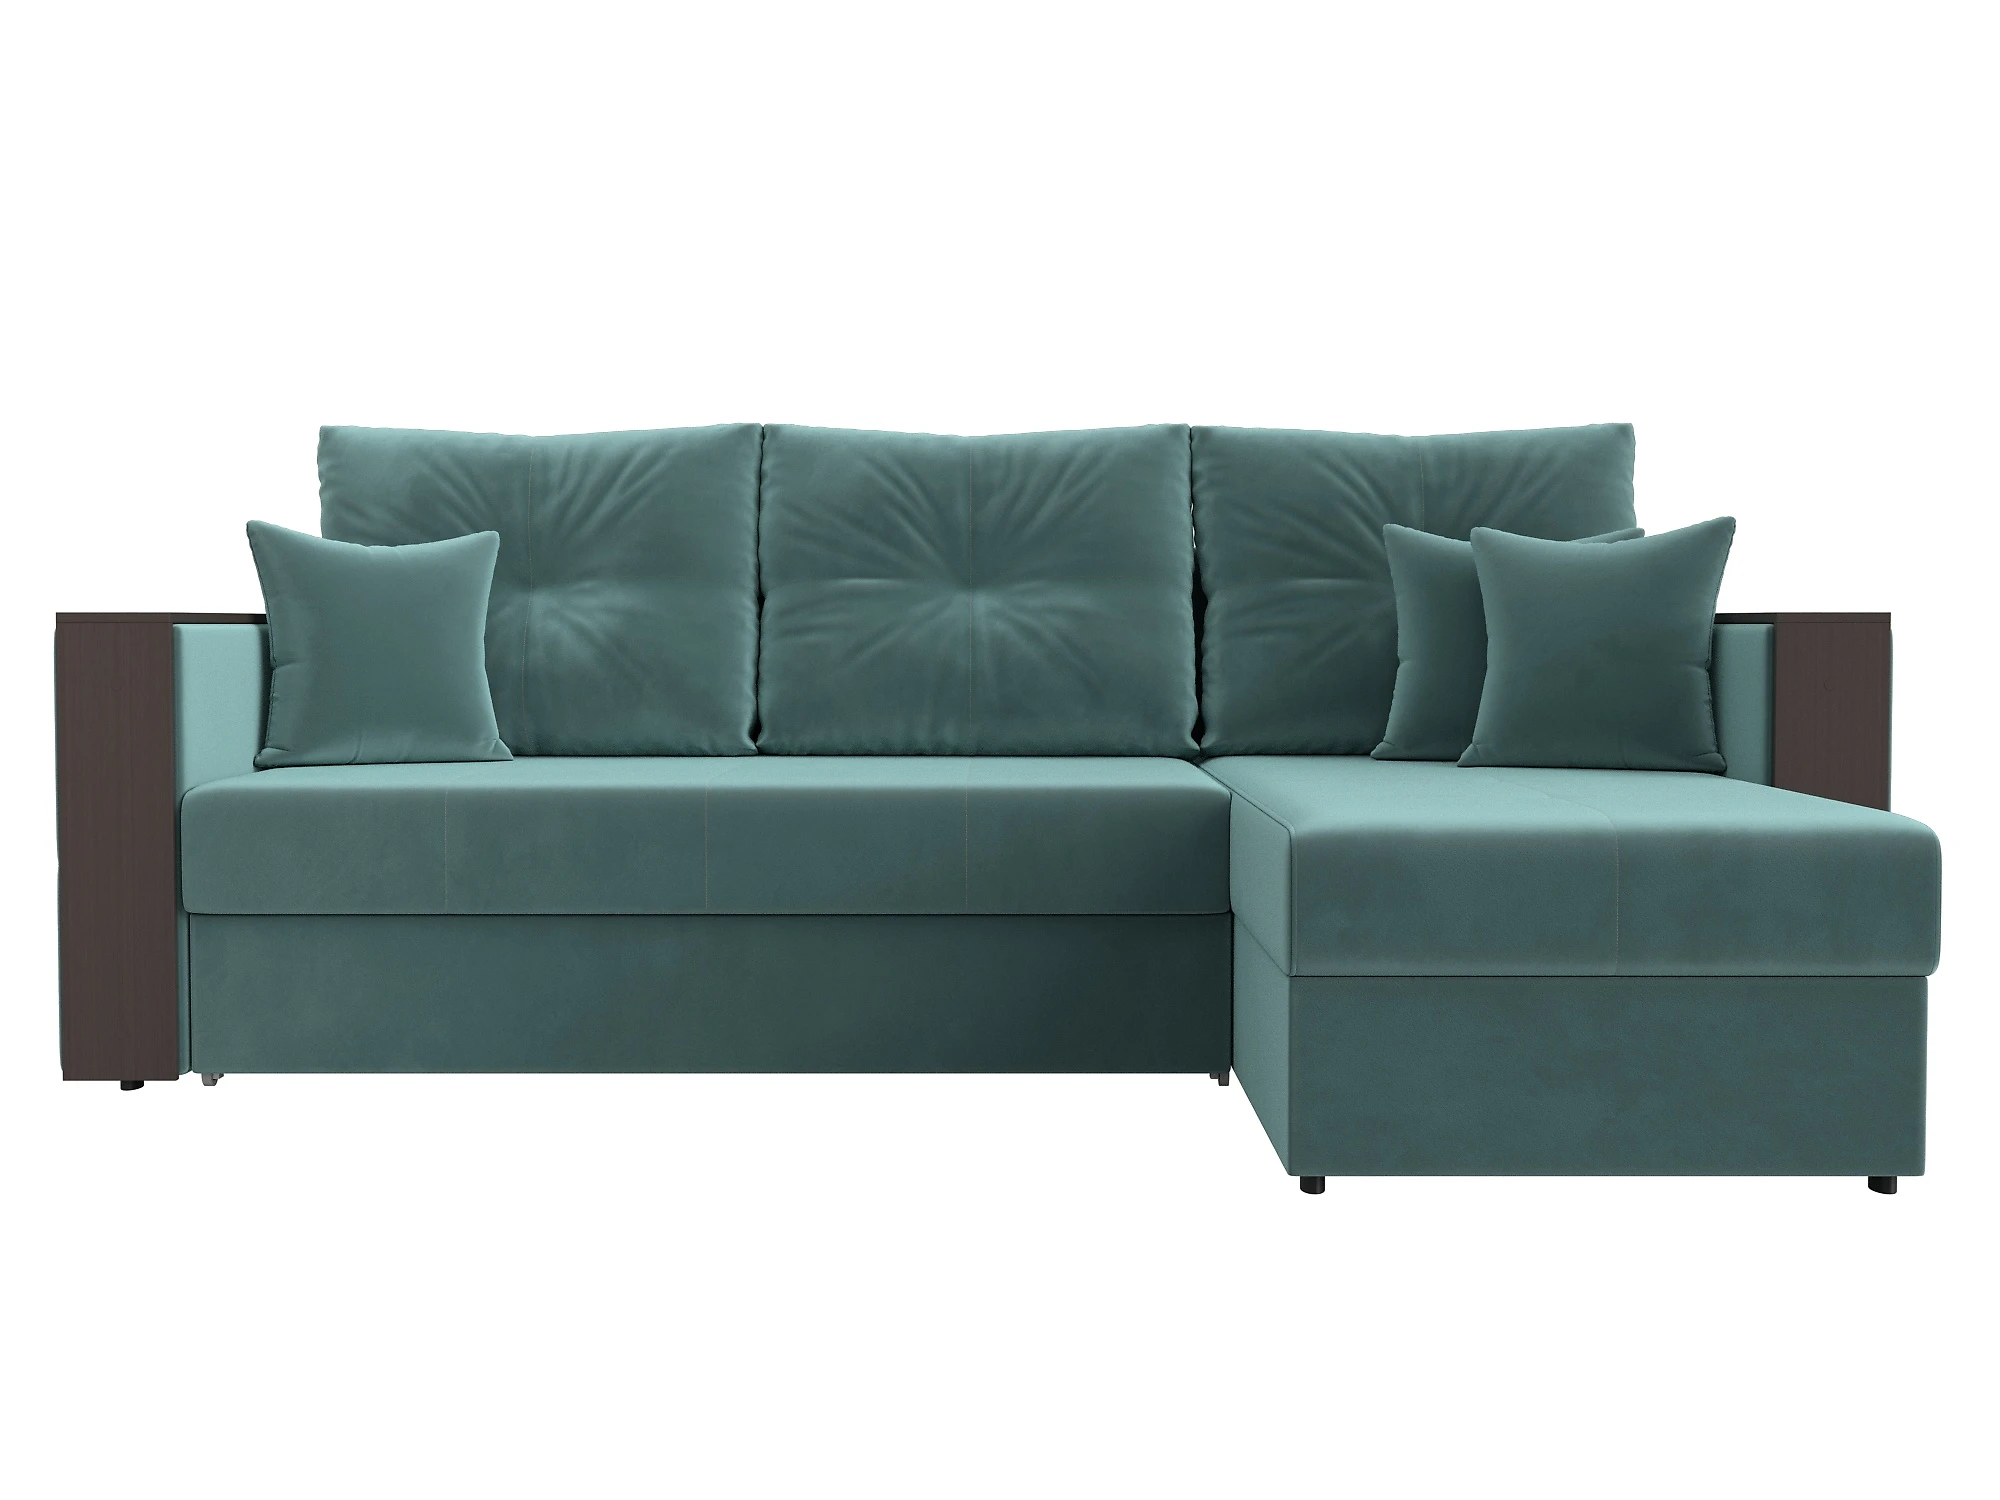 бирюзовый диван Валенсия Плюш Дизайн 2